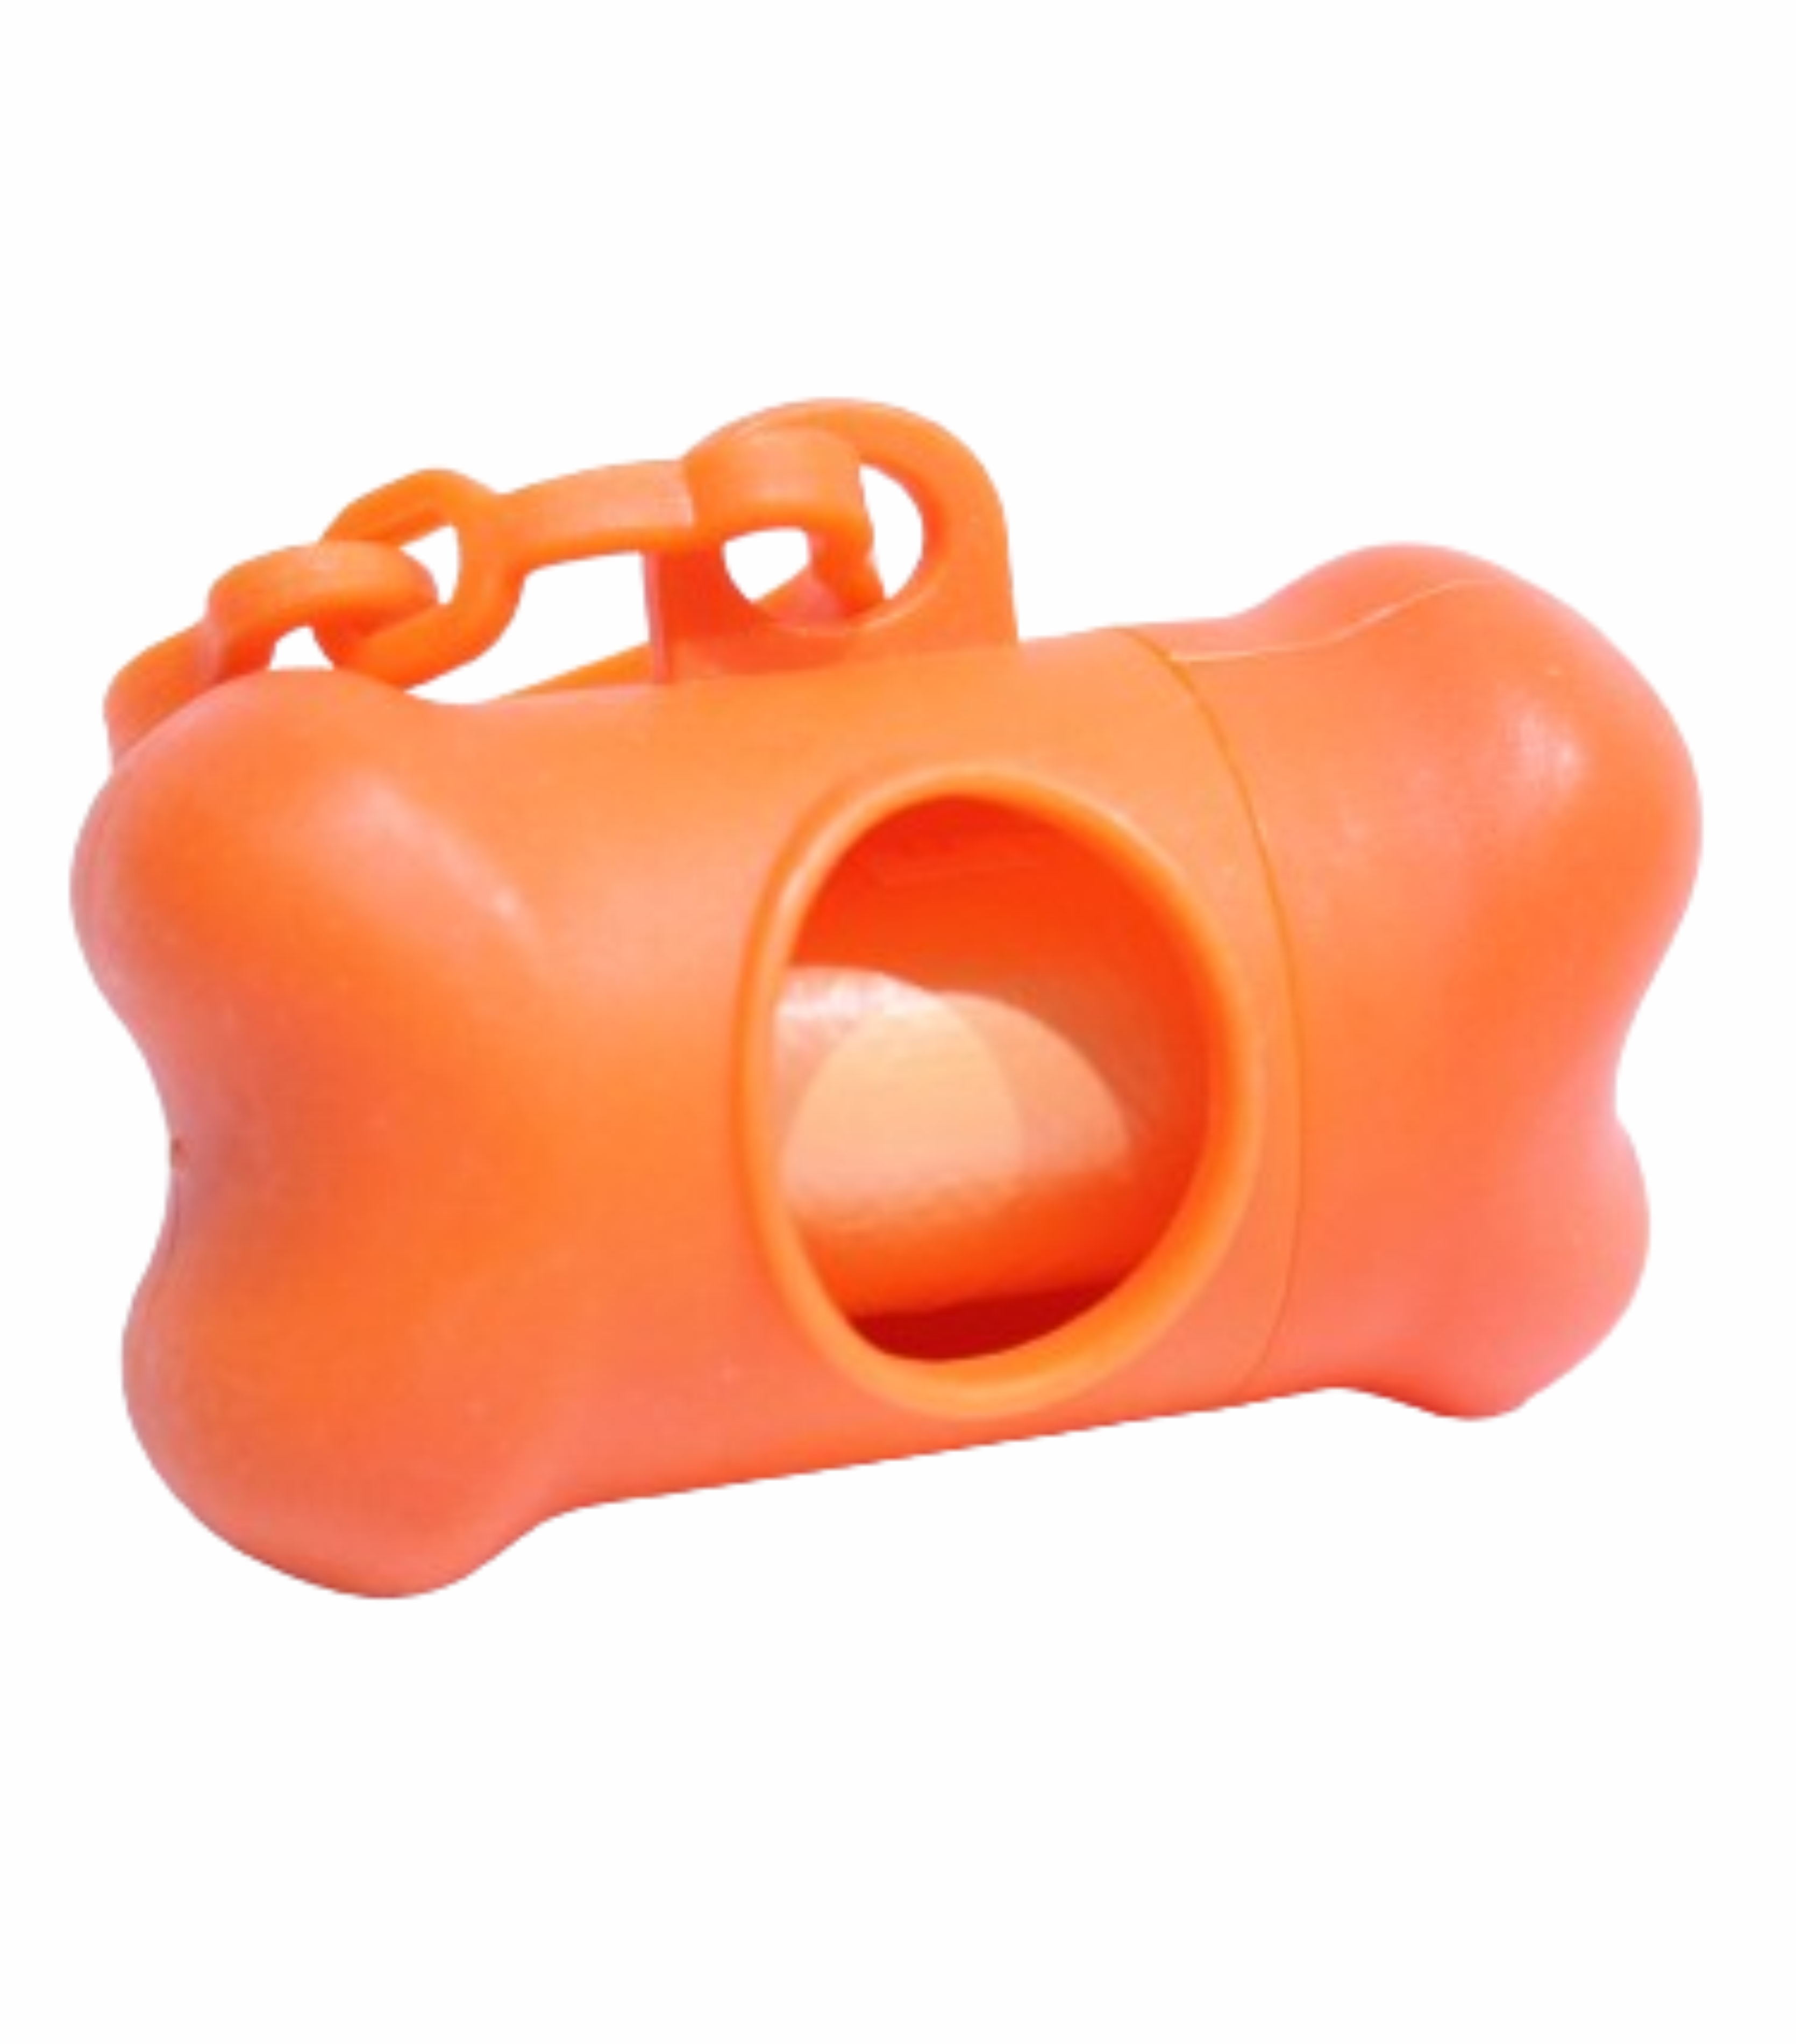 Portabolsas con forma de hueso para popó de perro (Bolsas para desechos de mascota)